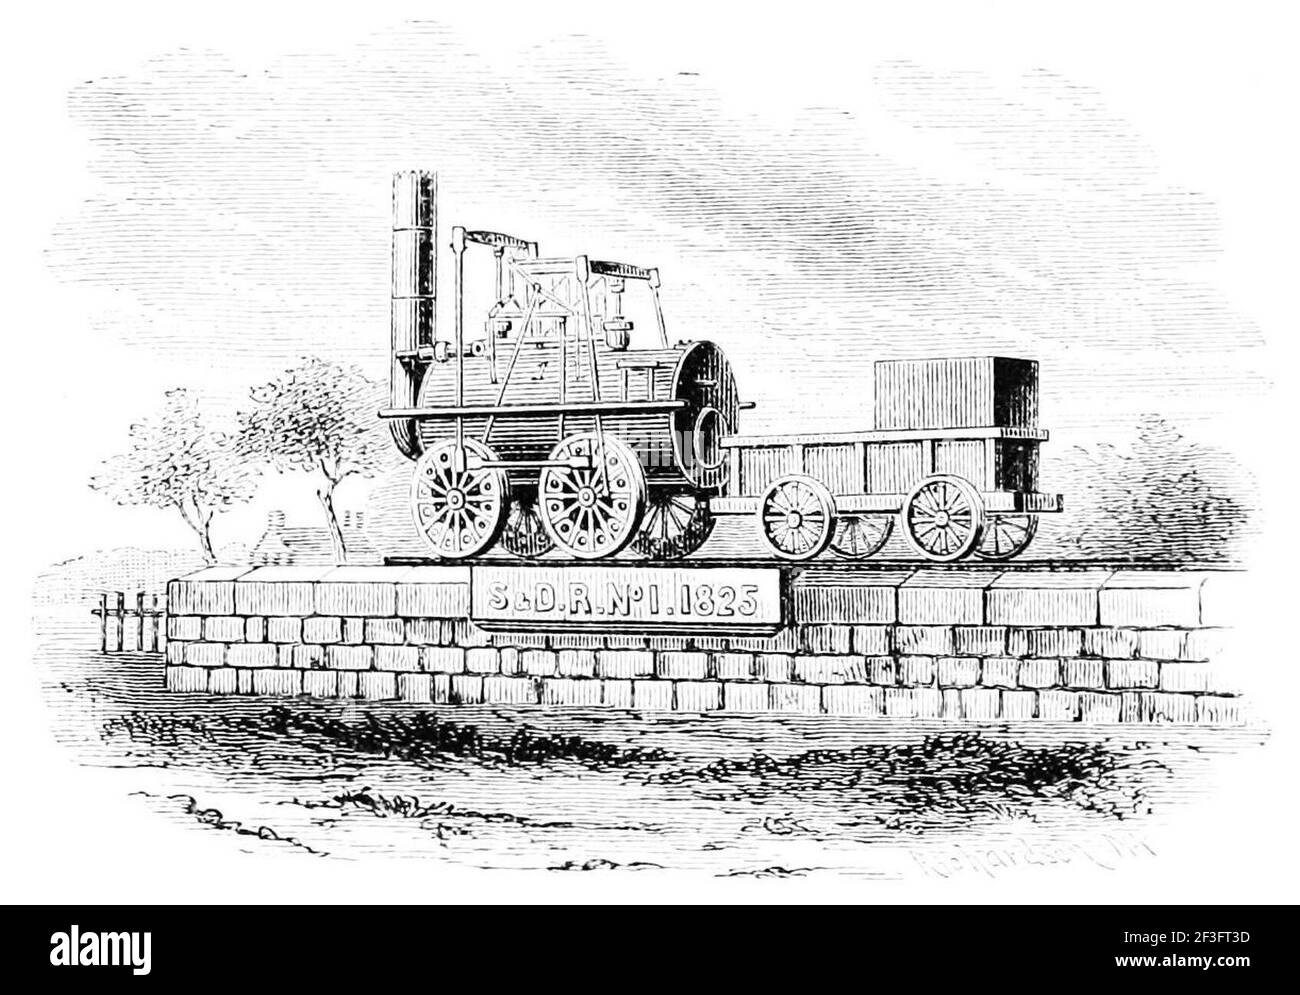 Stockton and darlington engine no 1 1825. Stock Photo